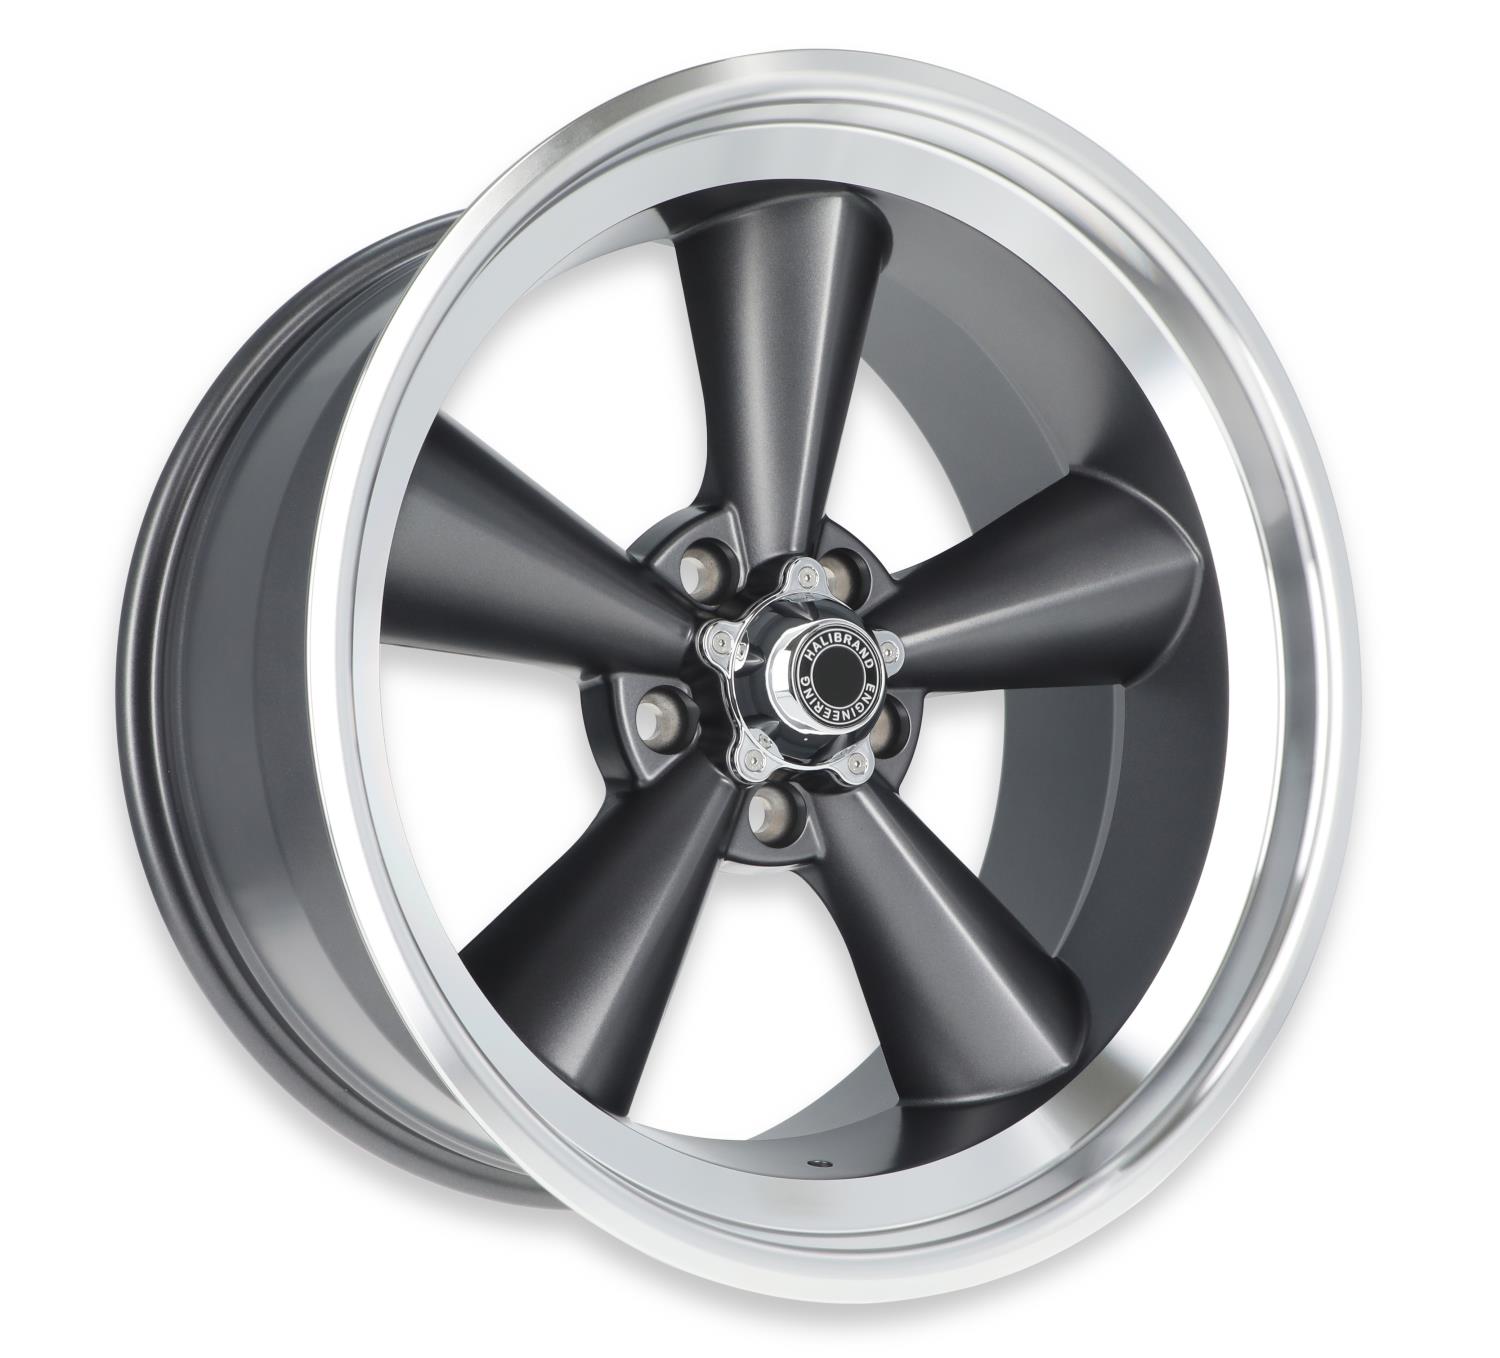 5 Spoke Rear Wheel, Size: 20x10", Bolt Pattern: 5x5", Backspace: 5.5" [Anthracite - Semi Gloss Clearcoat]